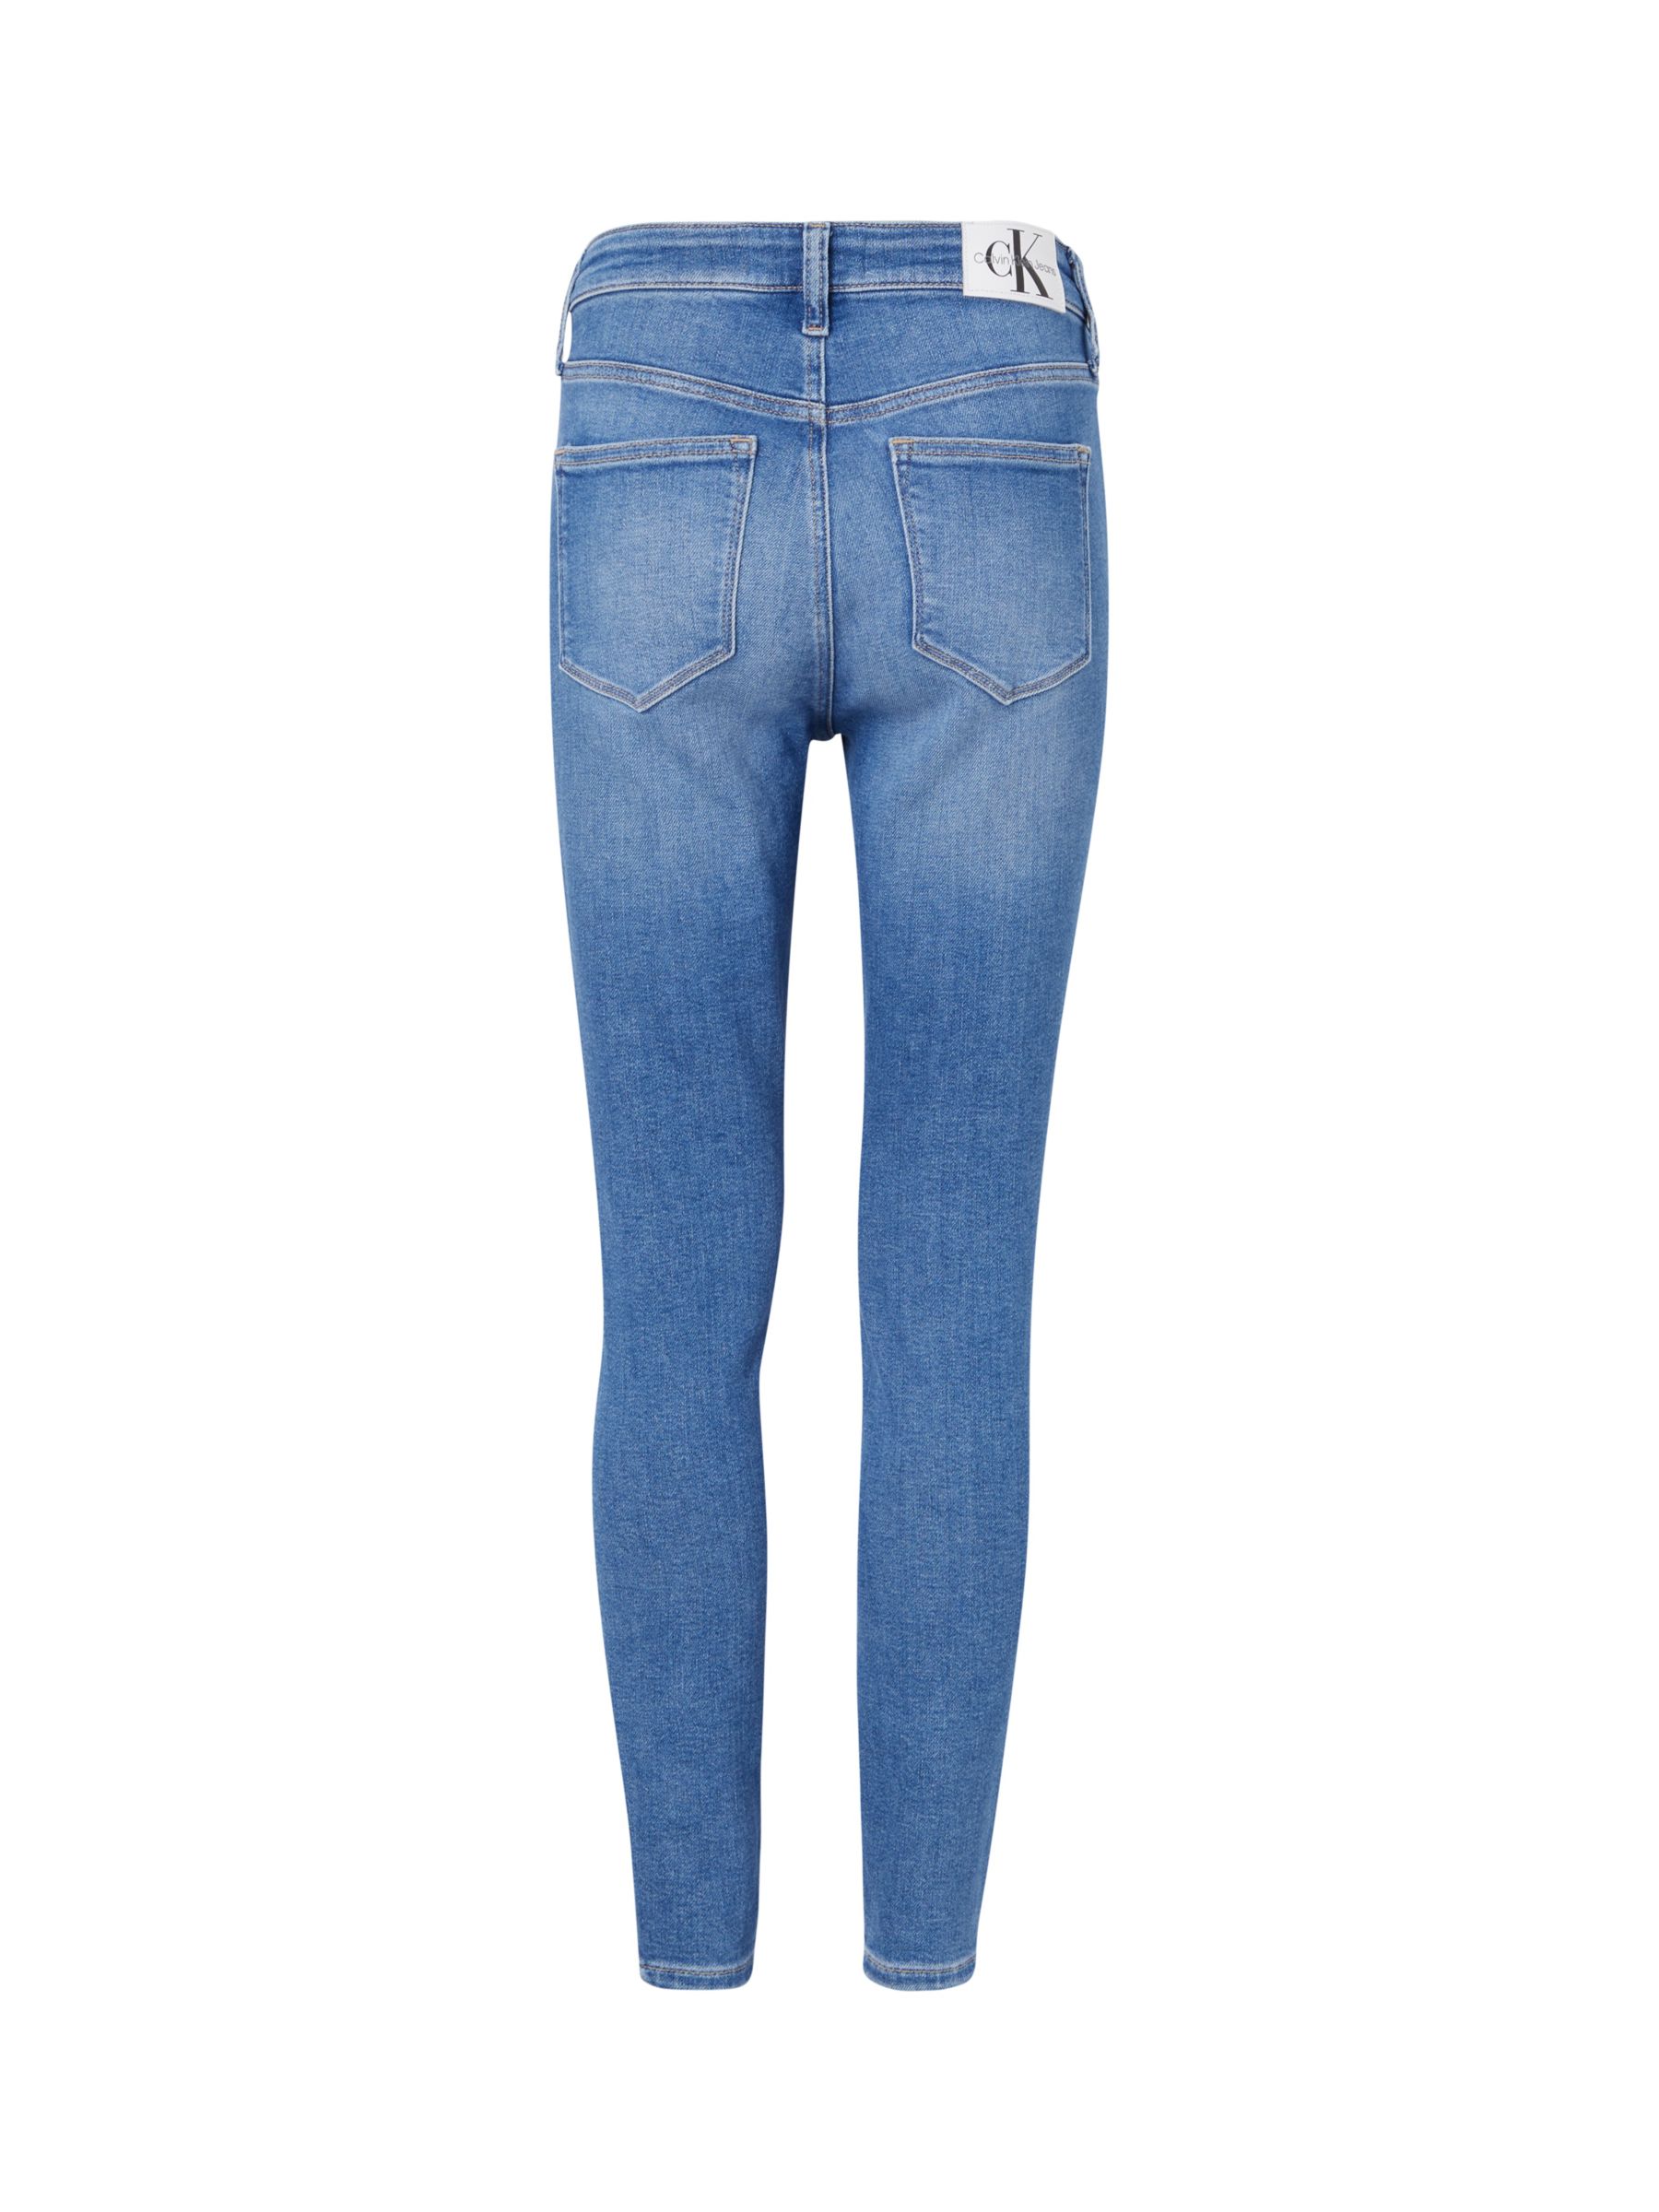 Calvin Klein High Rise Super Skinny Jeans, Light Blue, 25